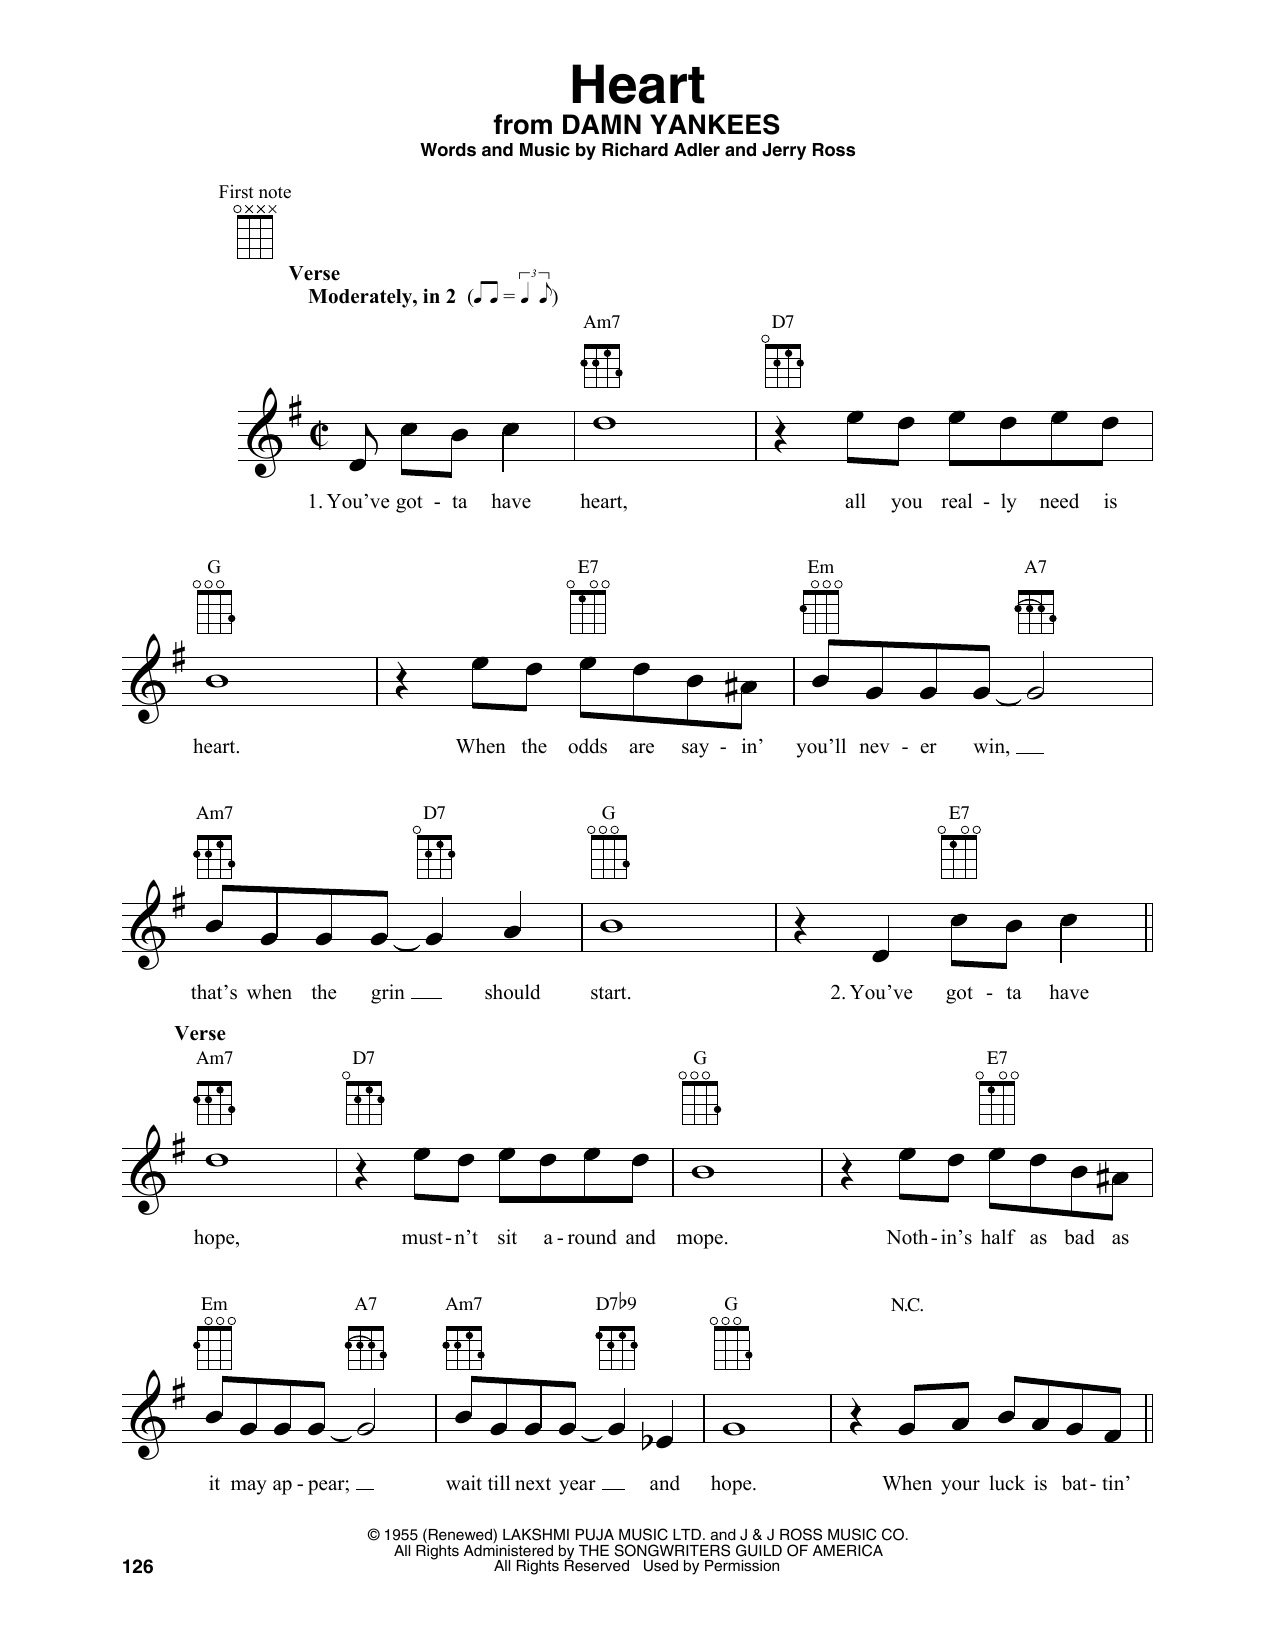 Adler & Ross Heart (from Damn Yankees) Sheet Music Notes & Chords for Baritone Ukulele - Download or Print PDF